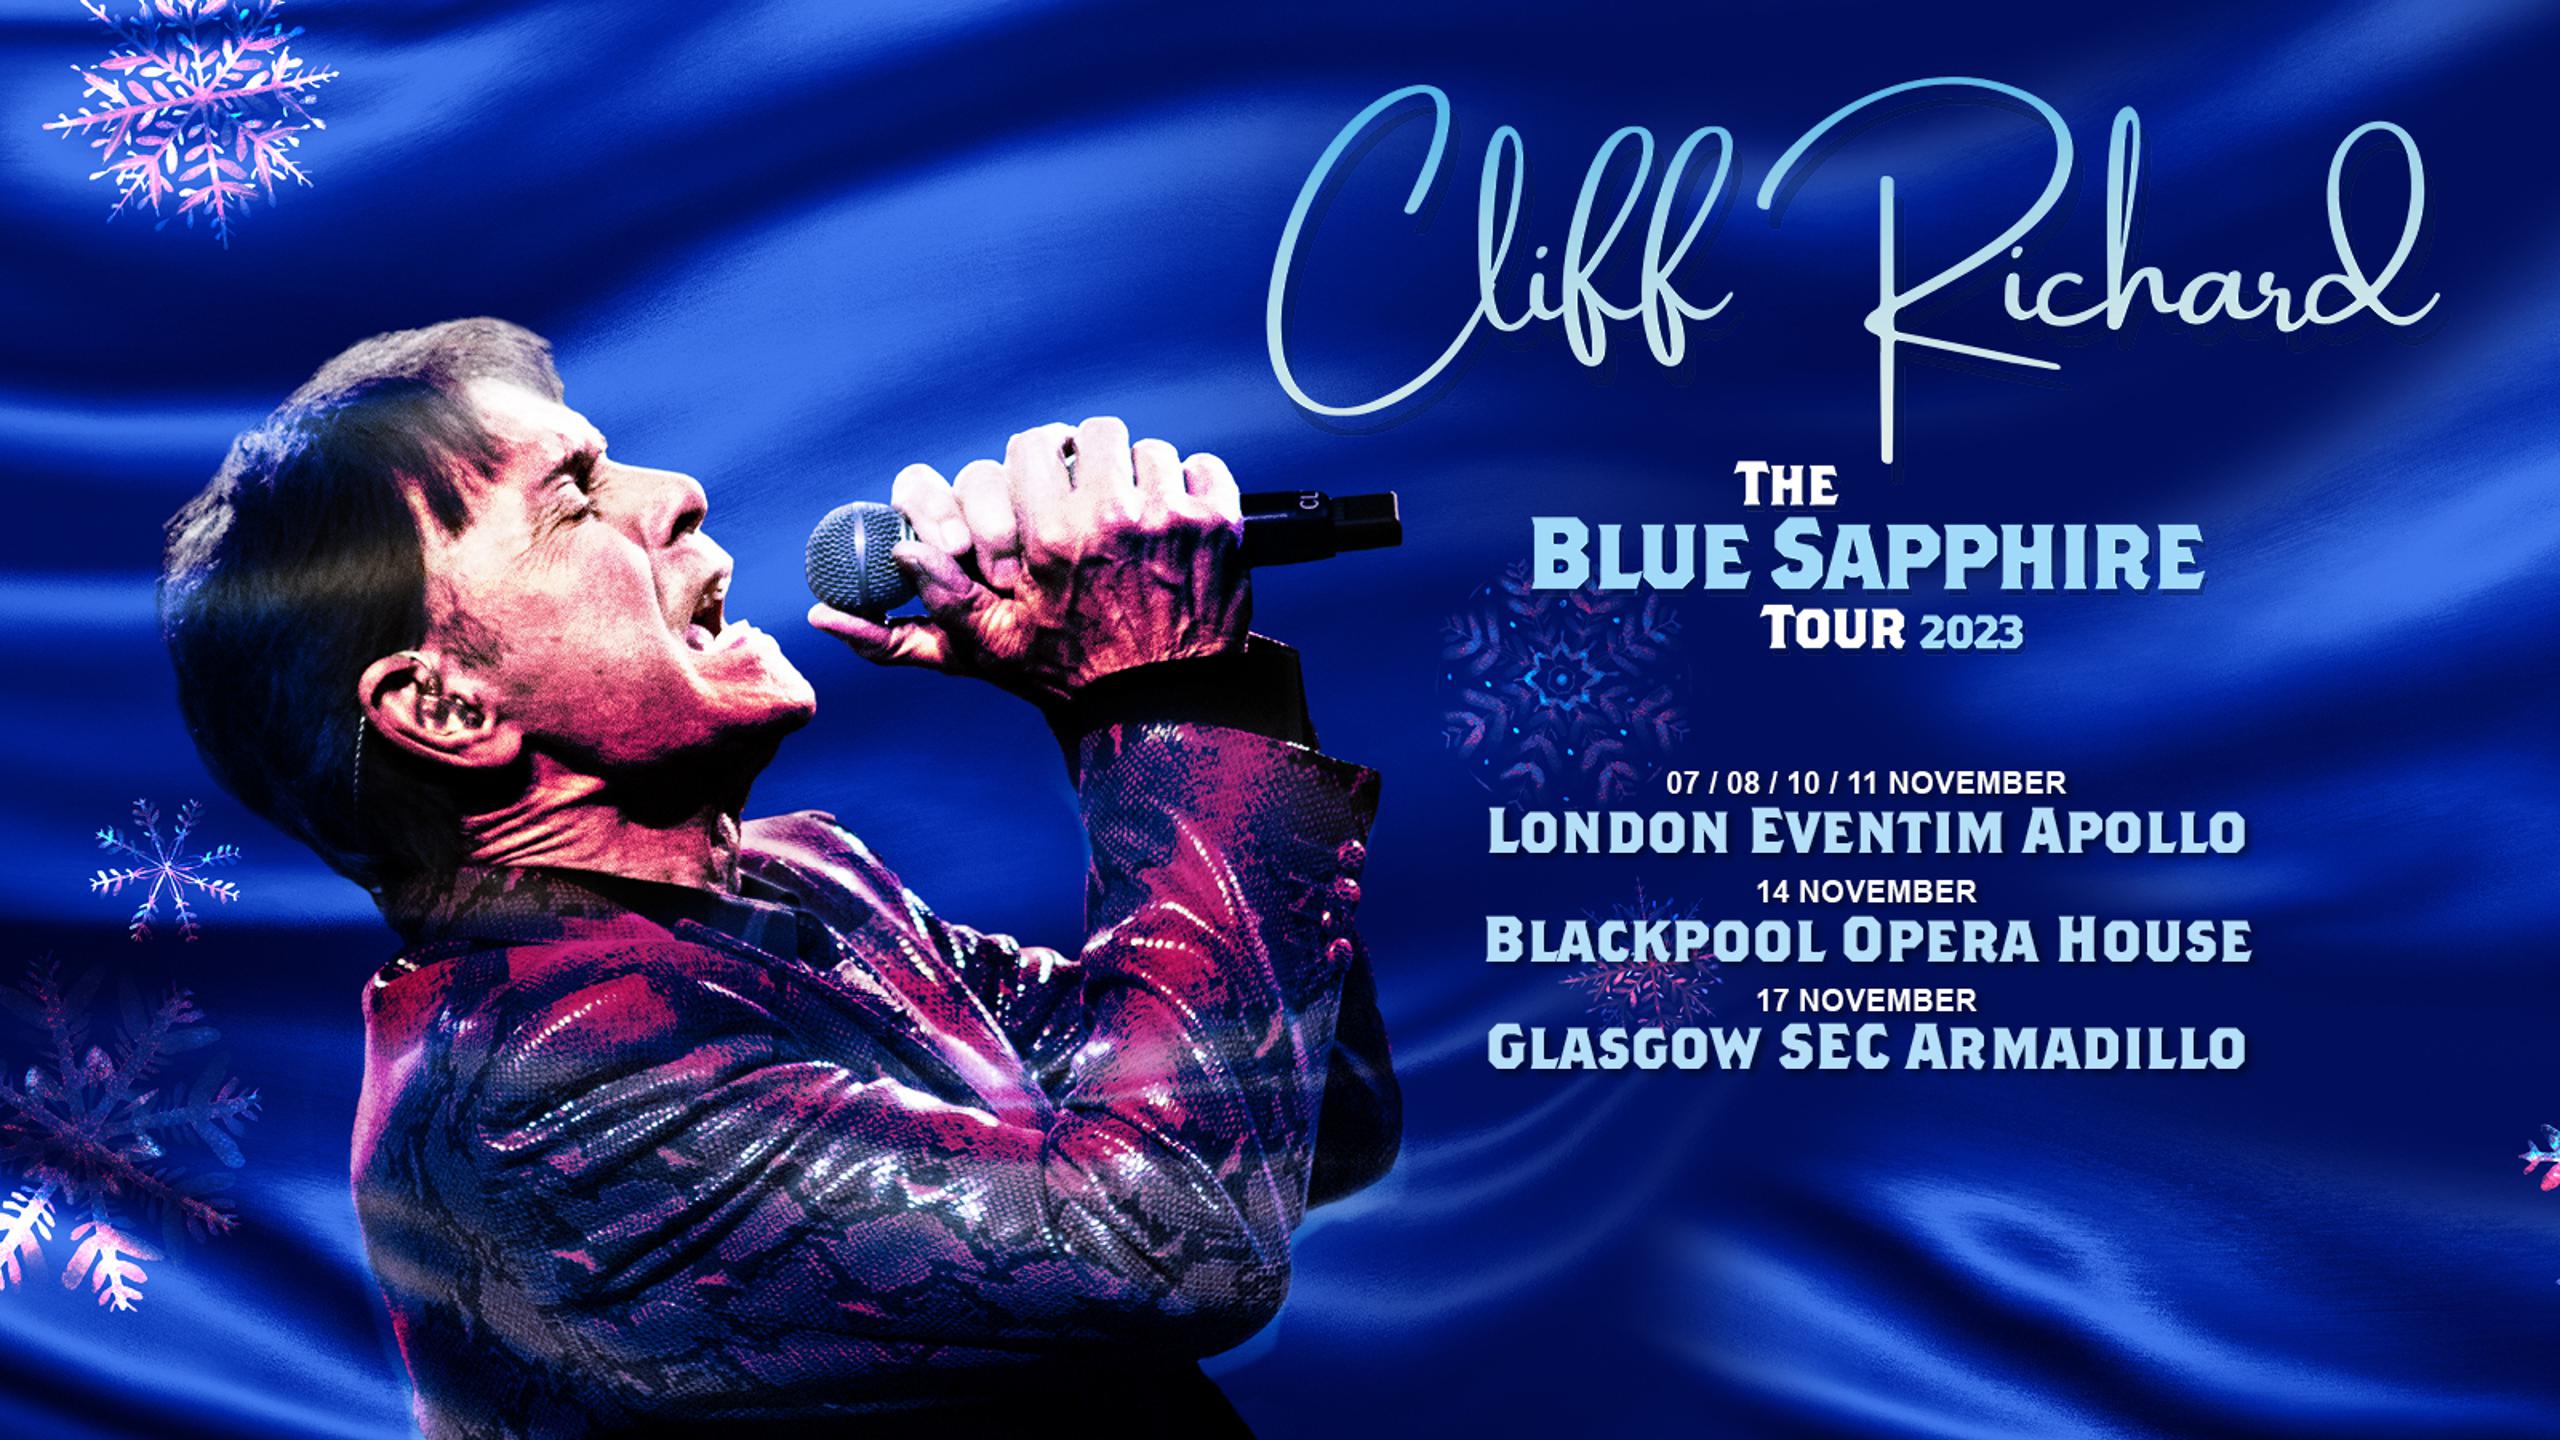 Cliff Richard concert tickets for Hammersmith Apollo (Eventim Apollo